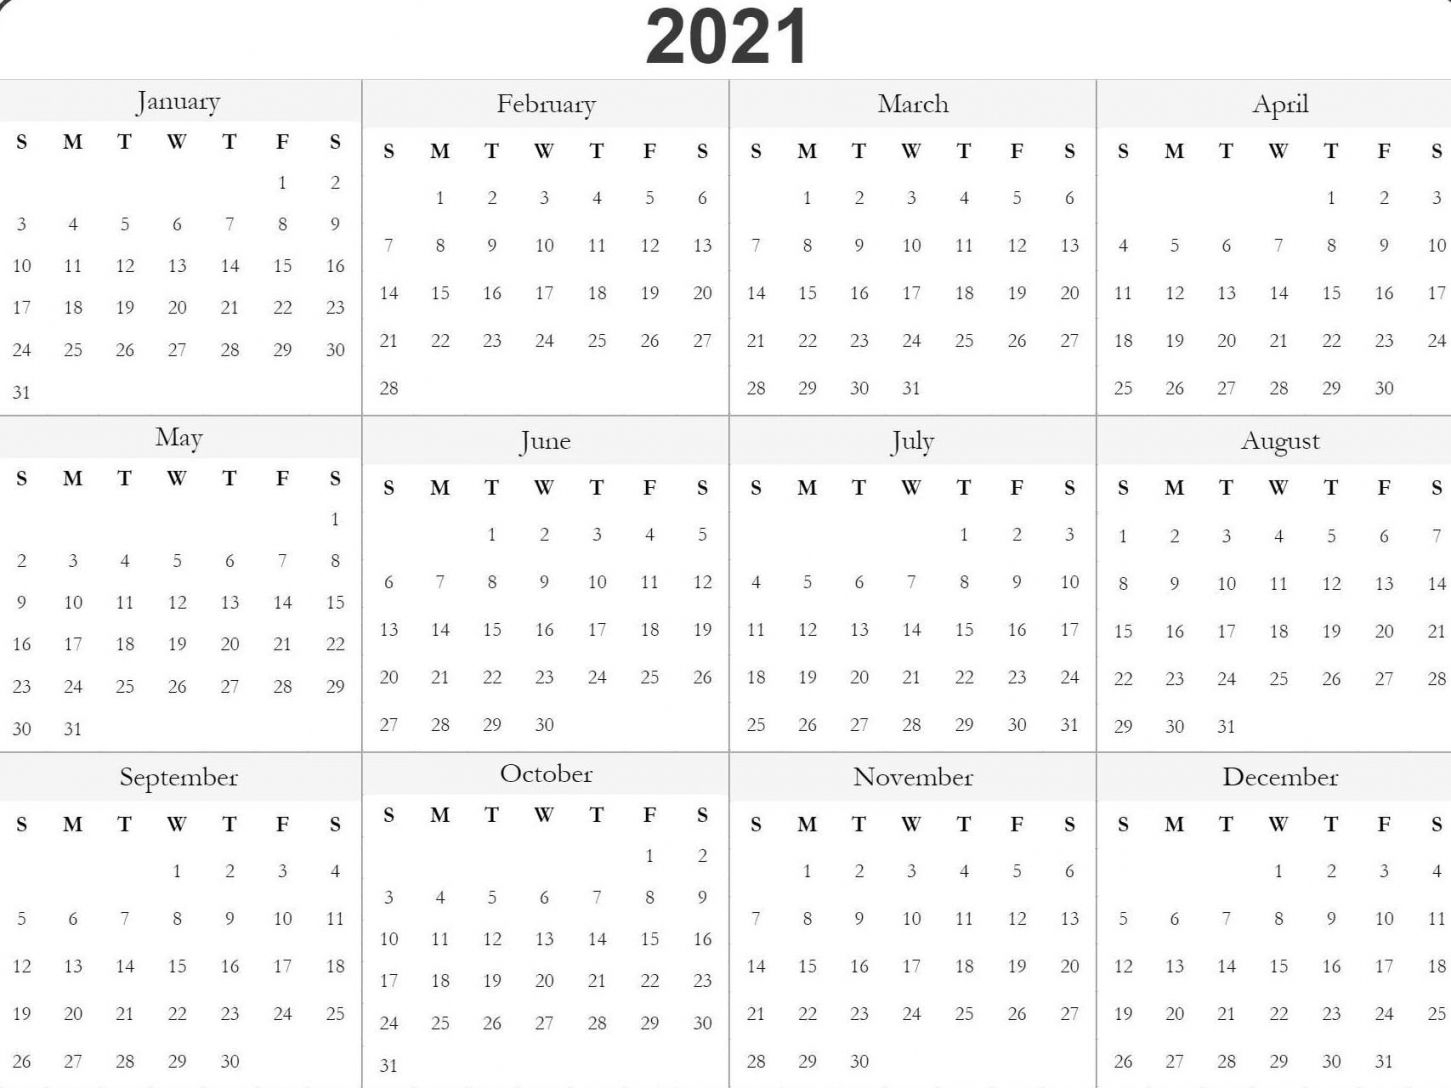 Take 2021 Julian Date